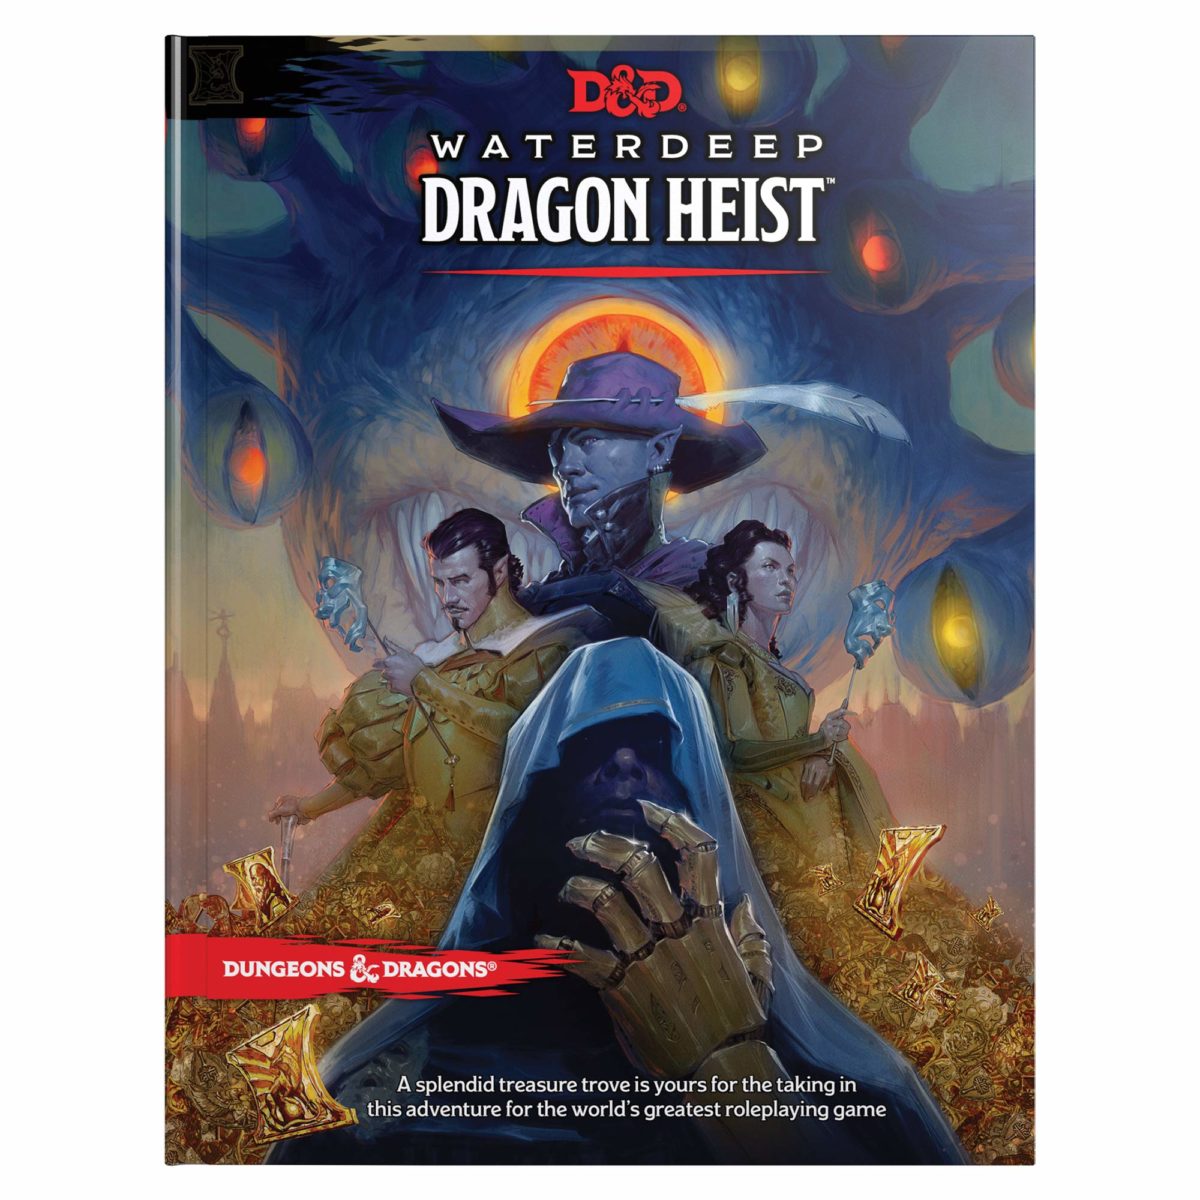 Dungeons and Dragons Waterdeep Dragon Heist manual.